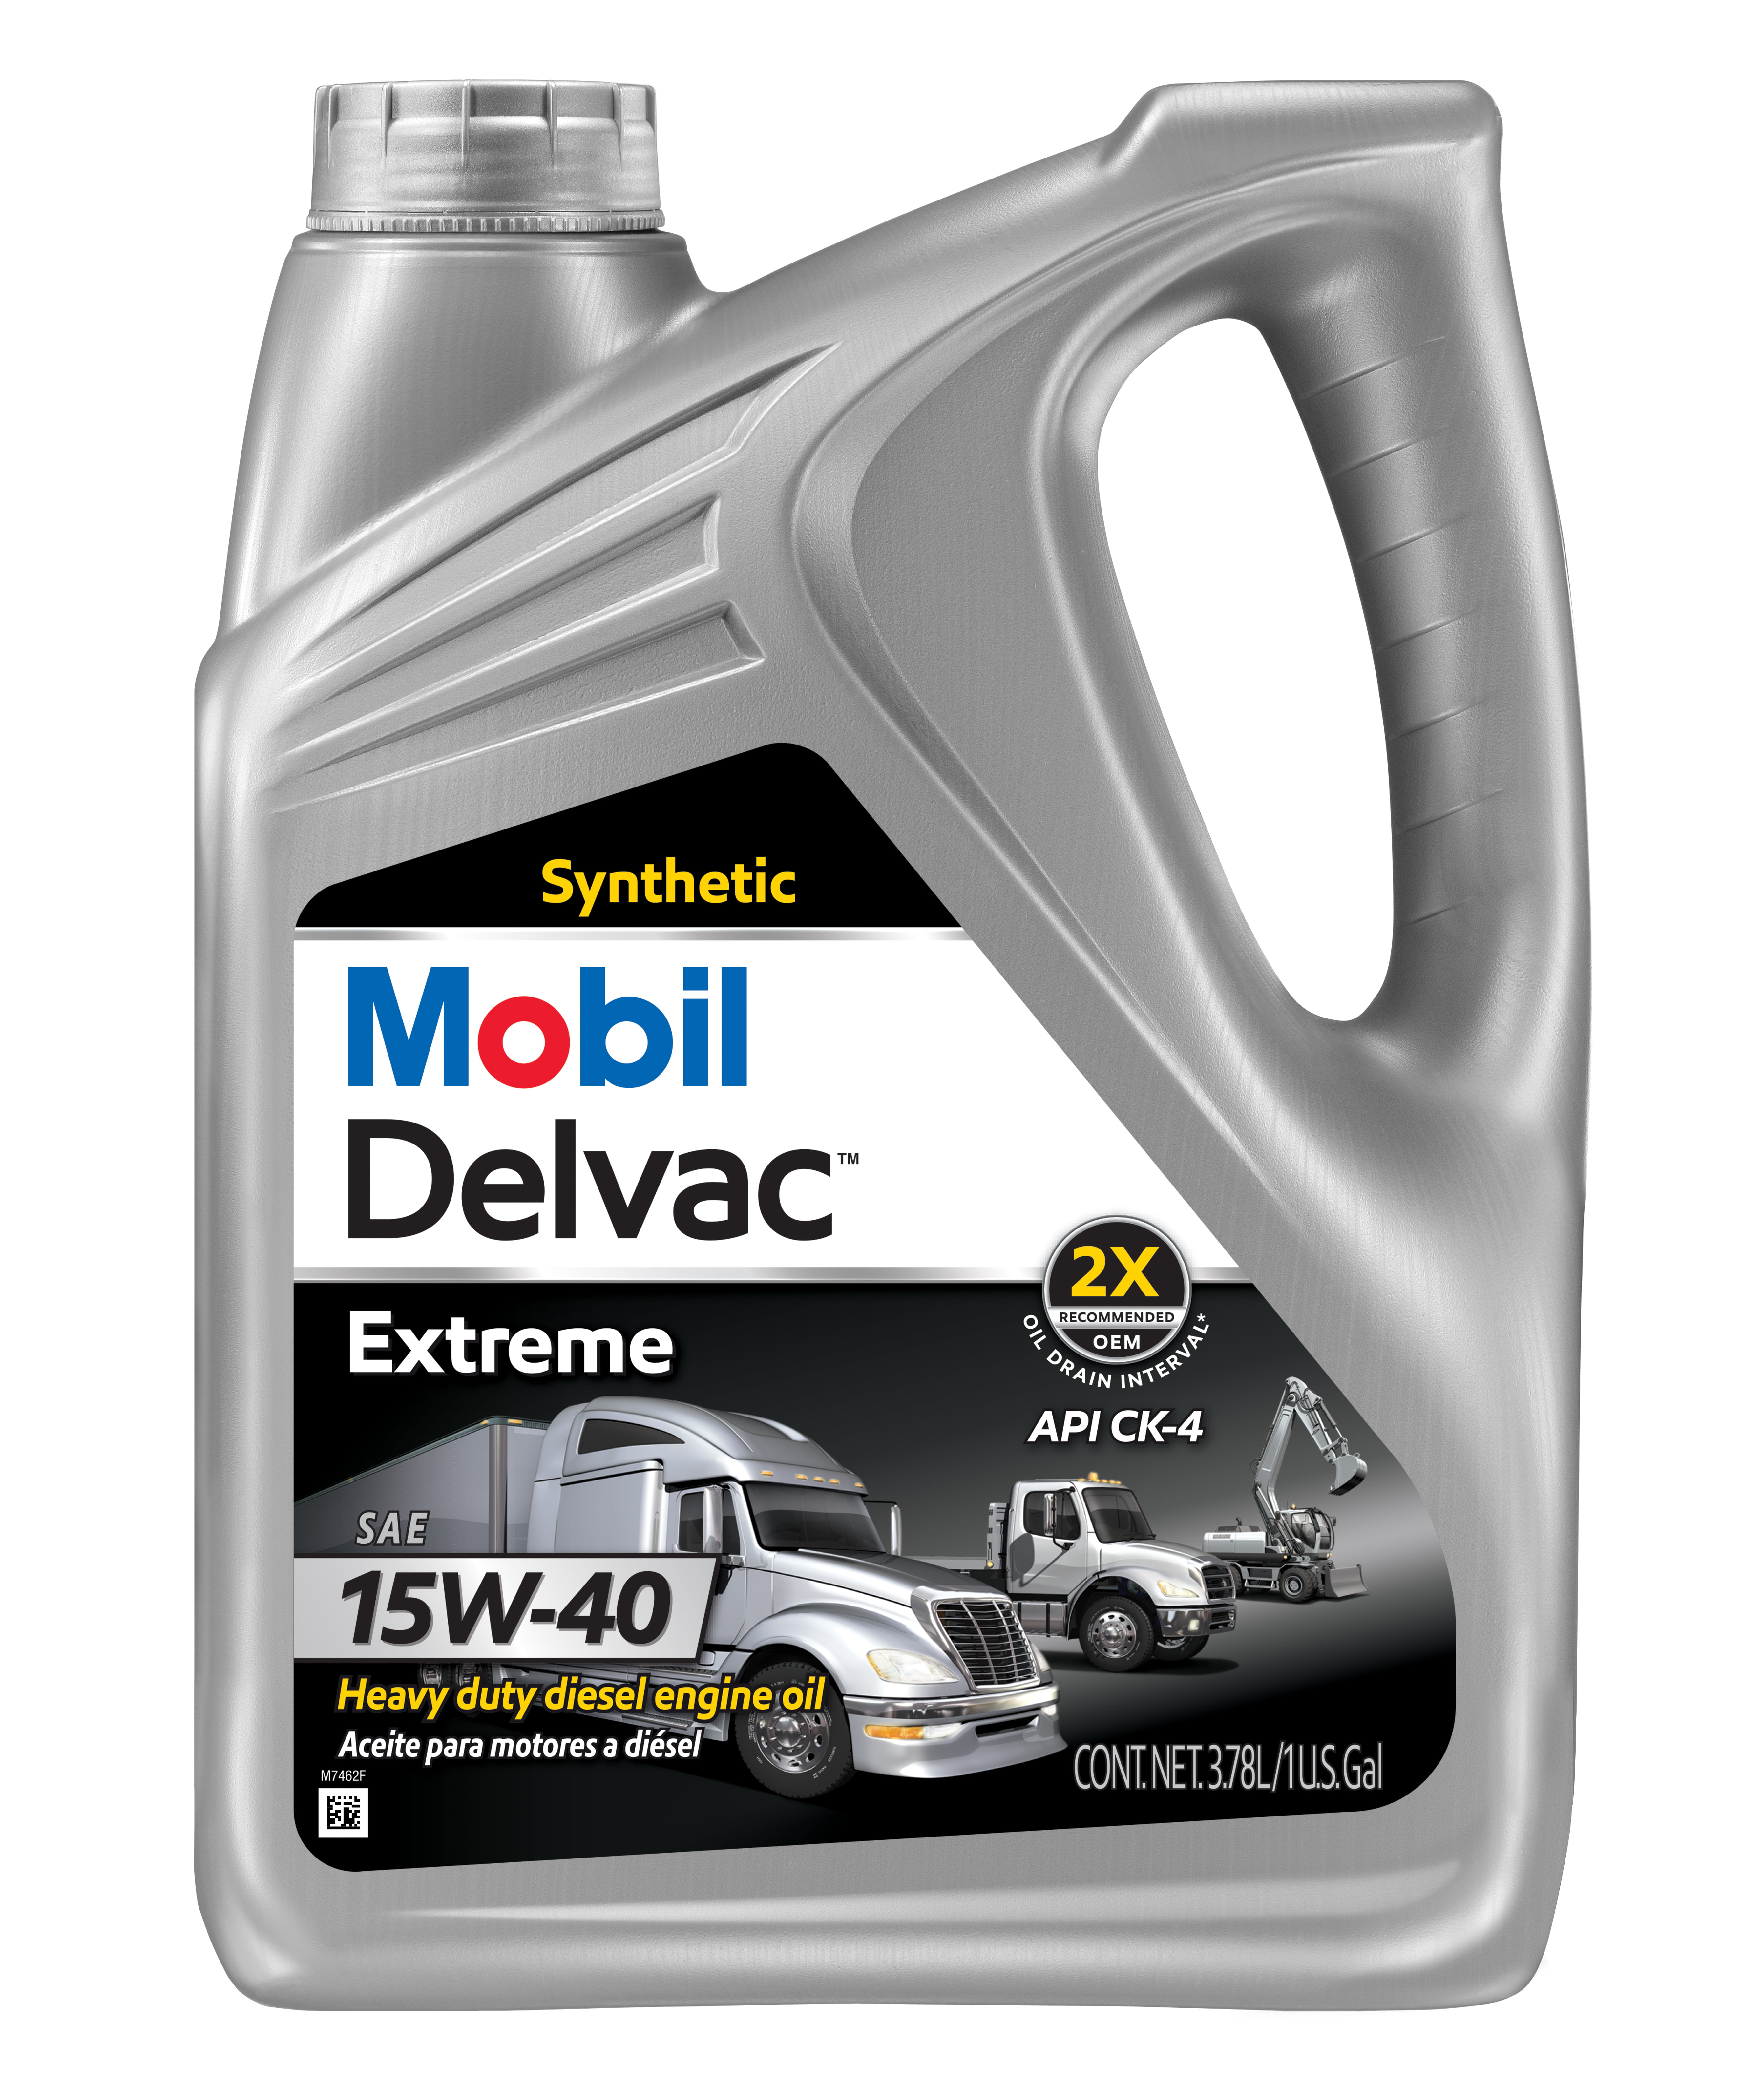 mobil-delvac-xtreme-diesel-engine-oil-15w-40-1-gal-125473-walmart